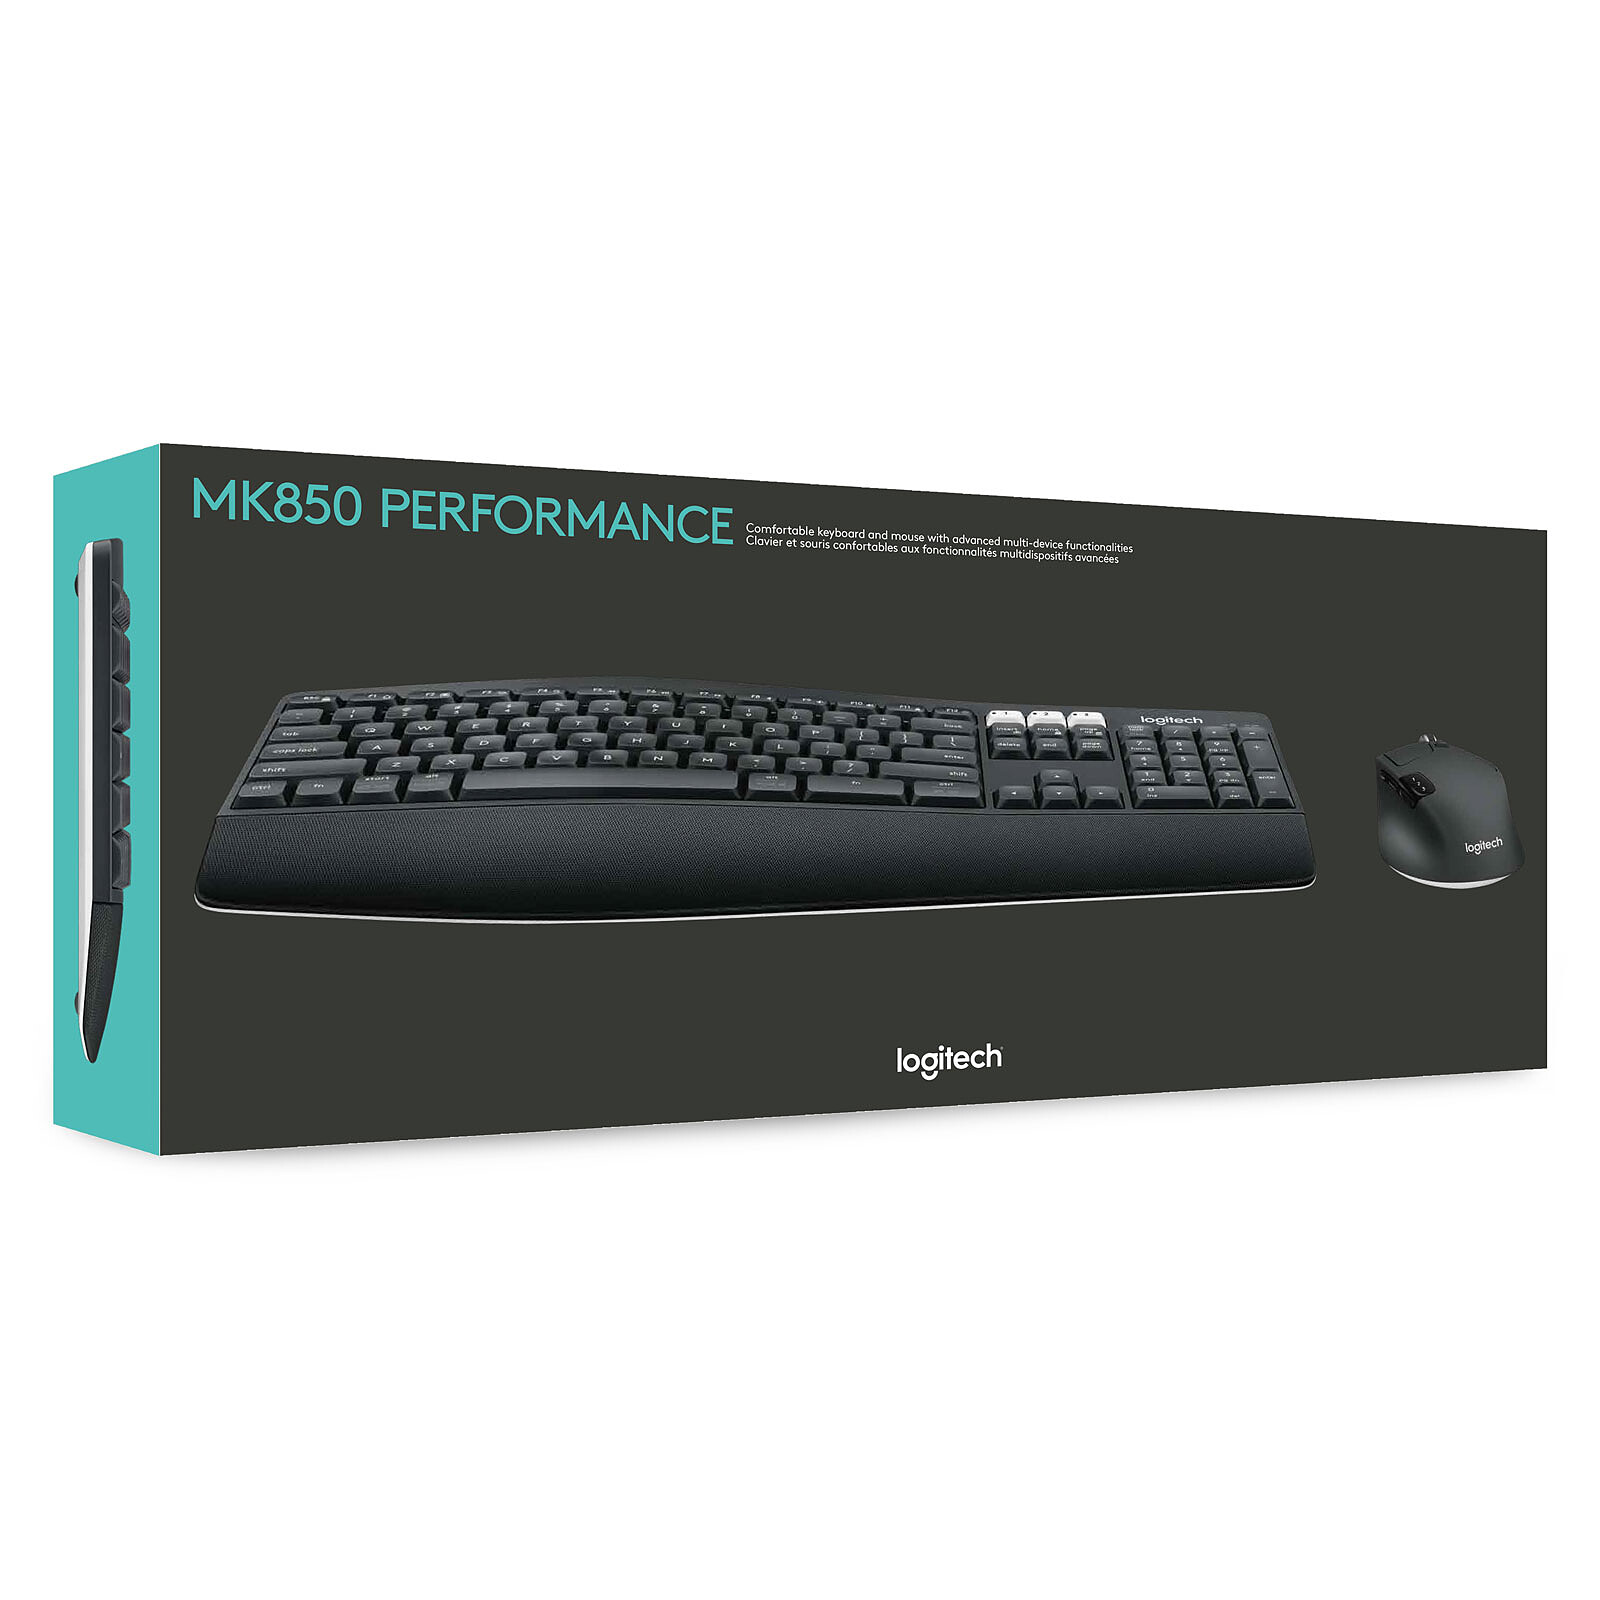 MK850 Performance - Keyboard mouse set Logitech on LDLC